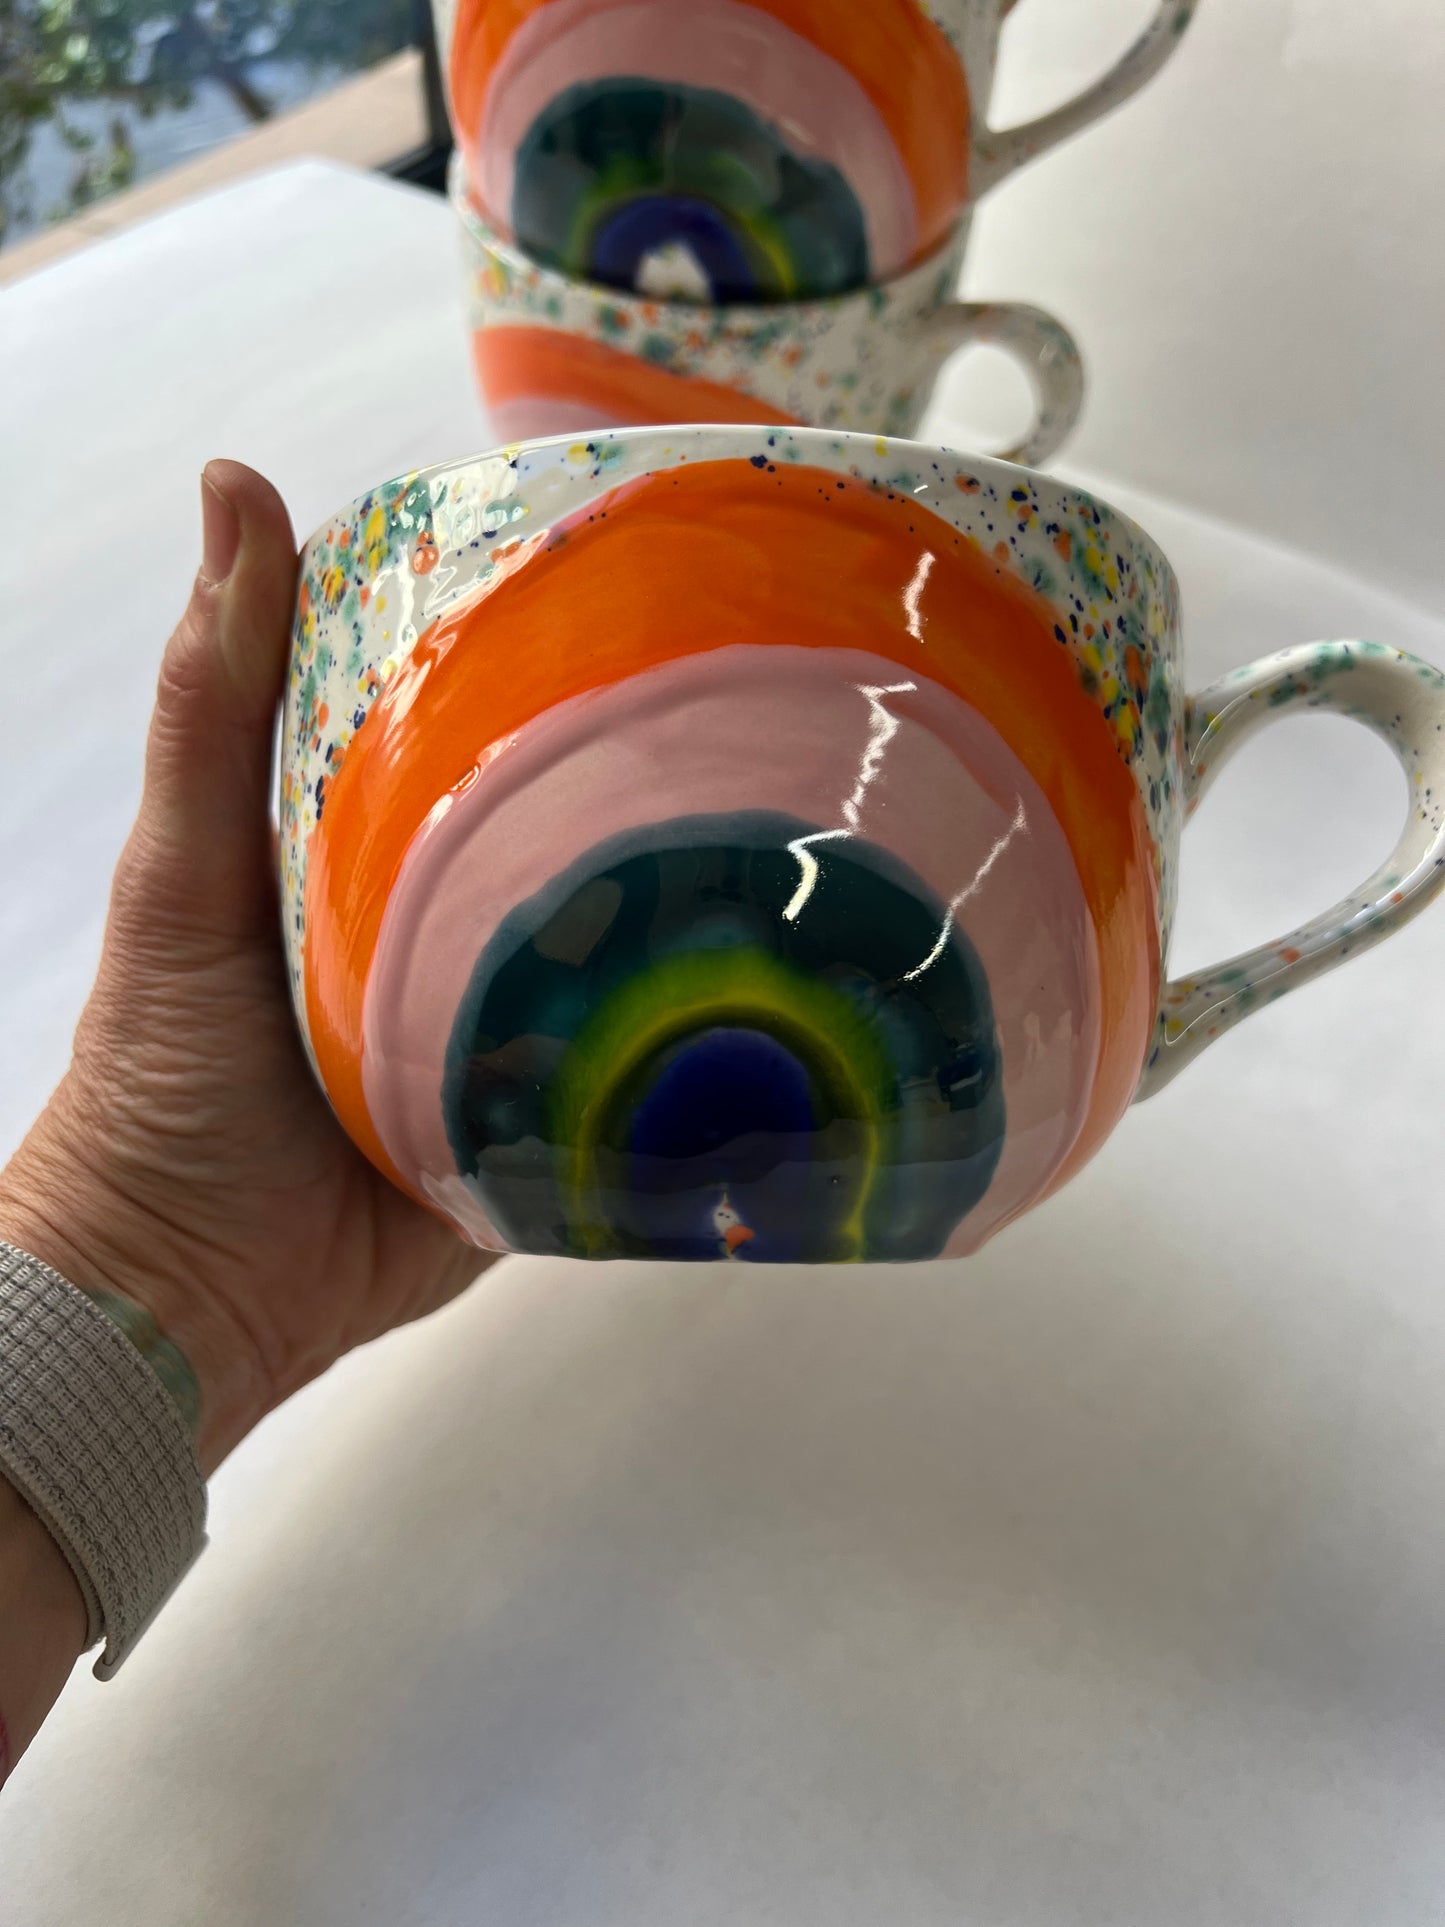 1 extra large big rainbow energy vibes mug with confetti glaze - mug samples/seconds/sale pieces